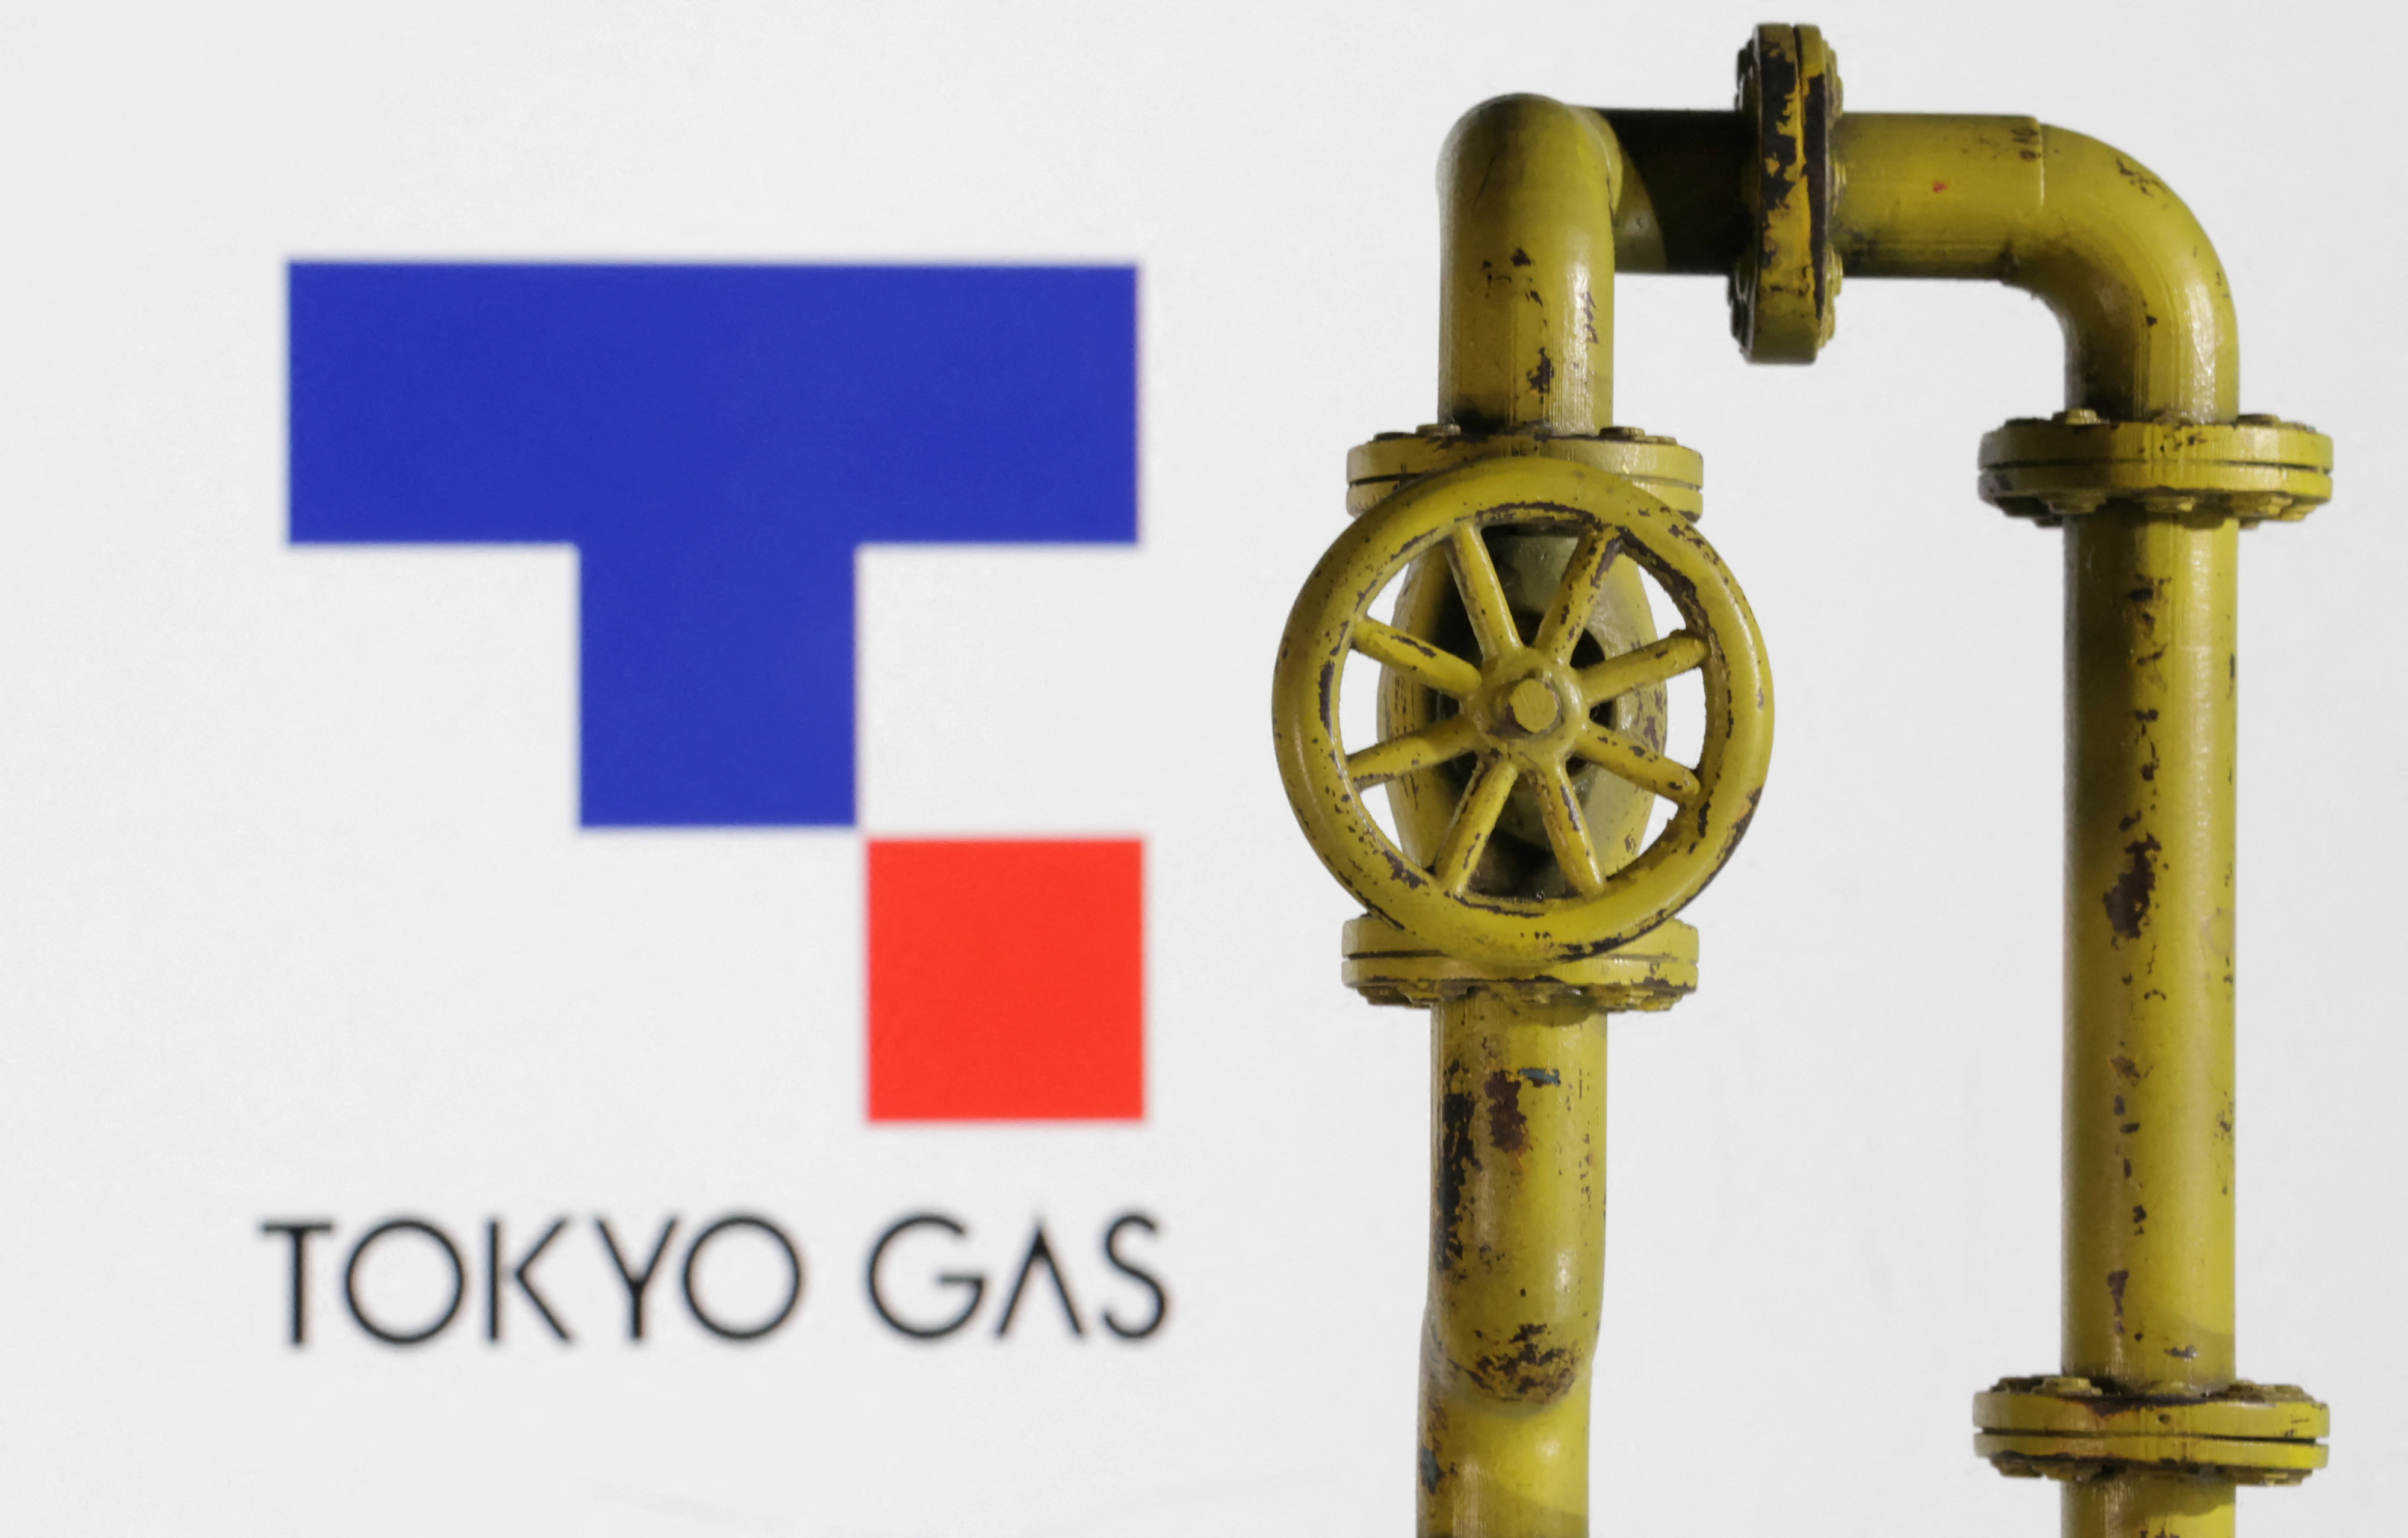 Illustration shows Tokyo gas logo